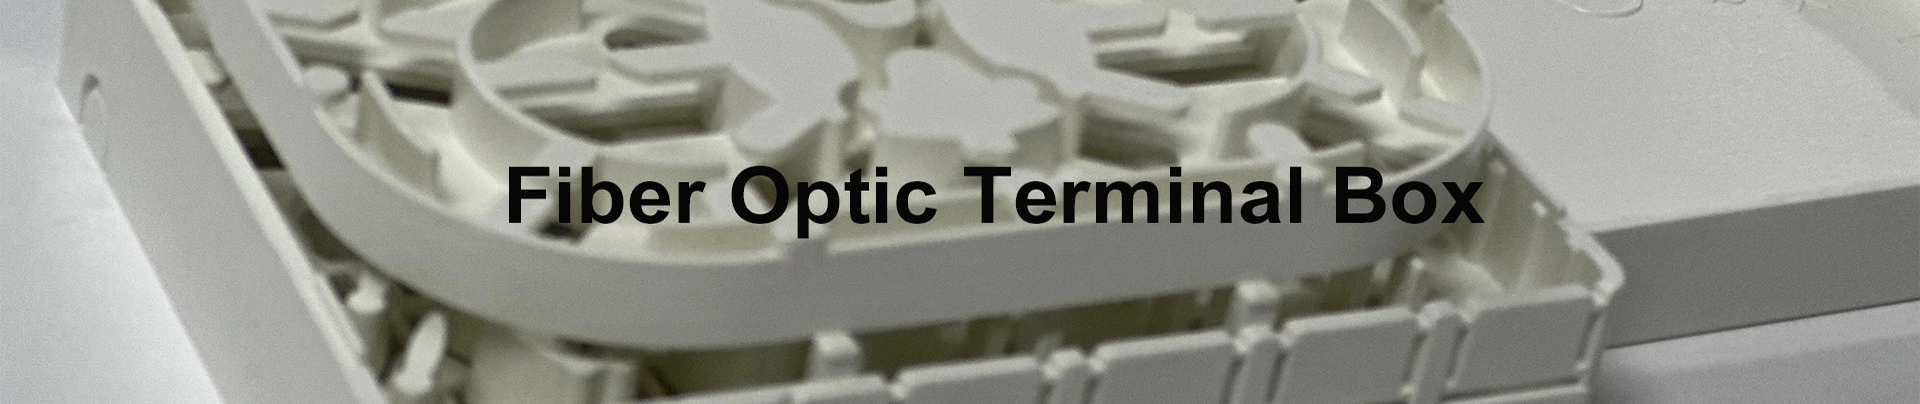 Fiber Optic Terminal Box